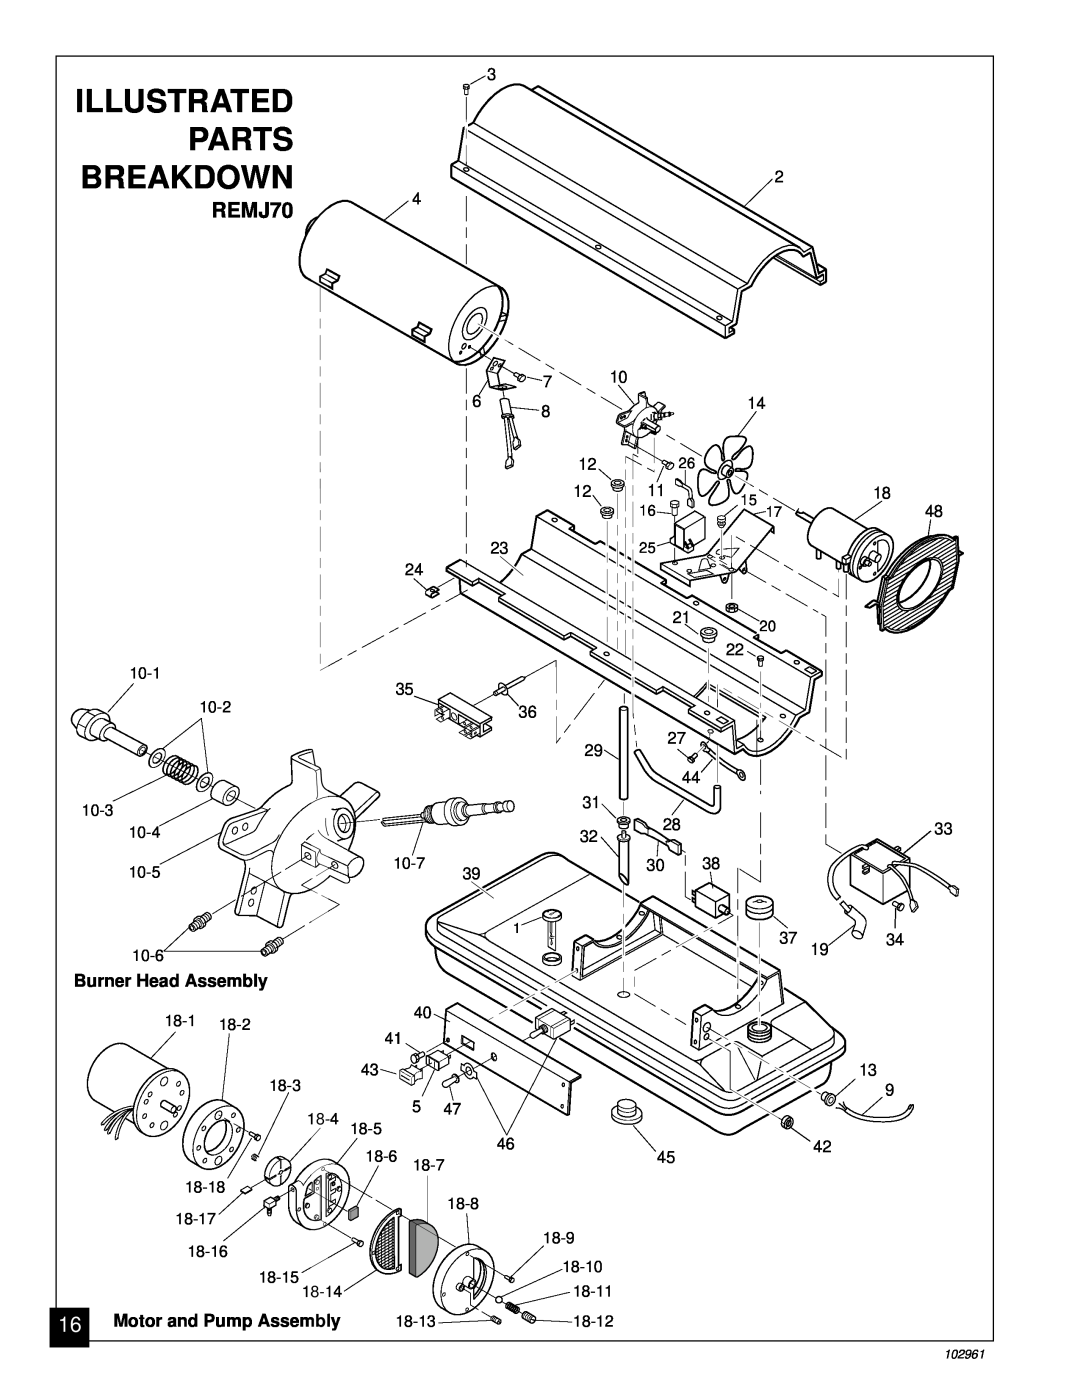 Remington REMJ150 owner manual Illustrated, Parts, Breakdown, REMJ70, Burner Head Assembly, Motor and Pump Assembly 